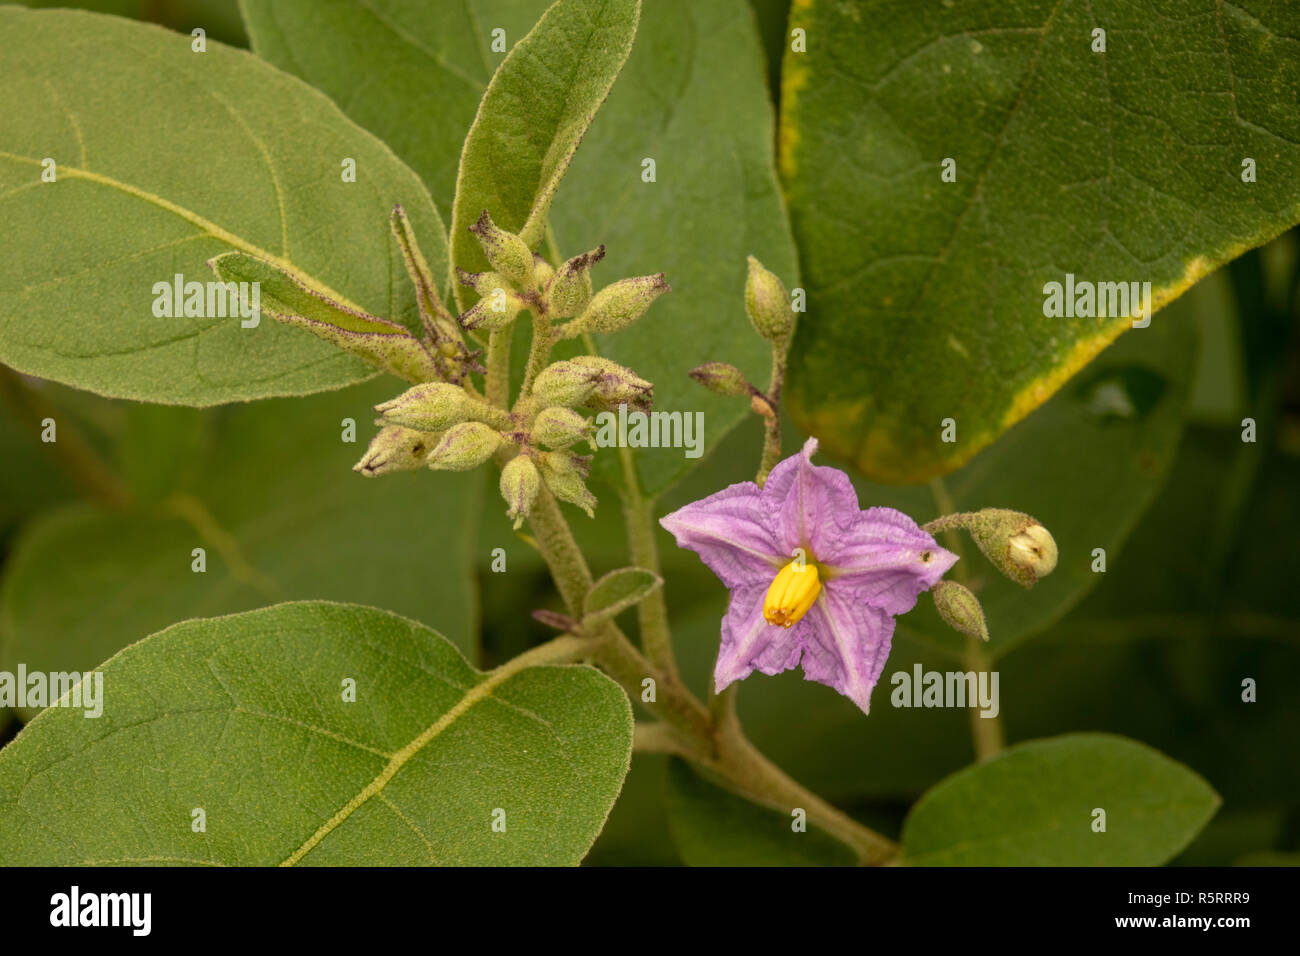 flowering Atropa belladonna, commonly known as belladonna or deadly nightshade, Uganda, Africa Stock Photo